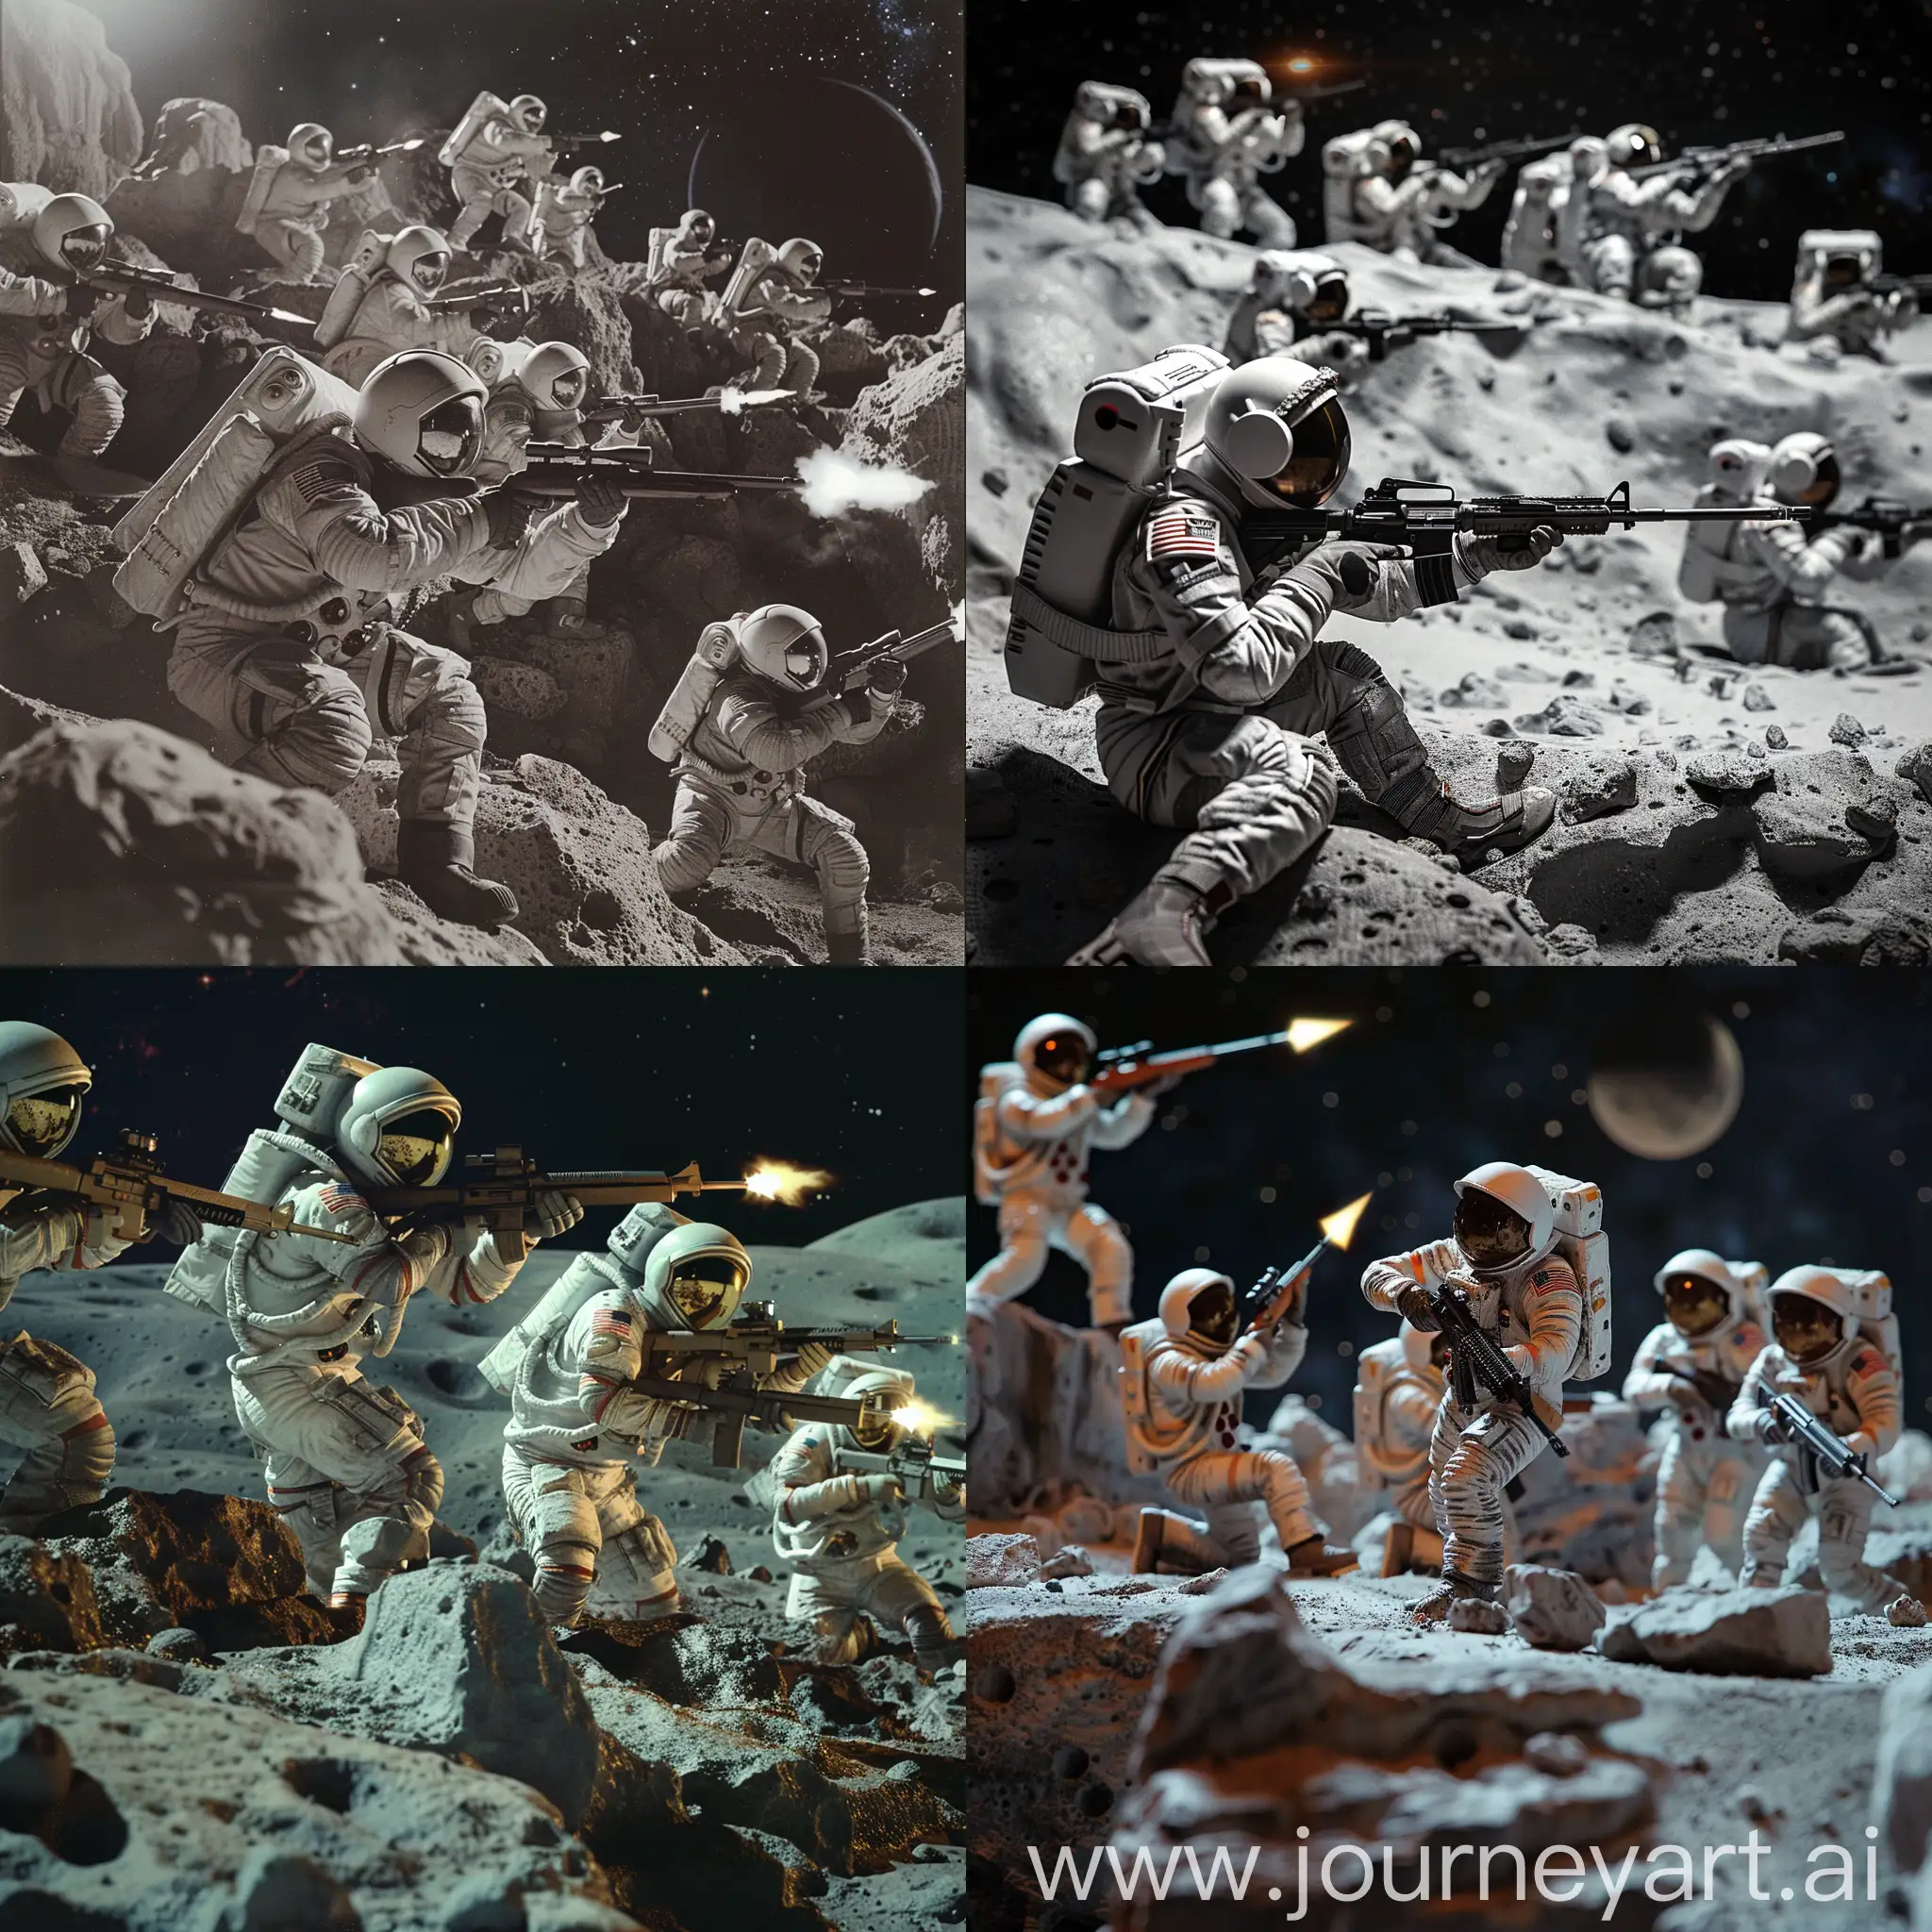 Intense-SciFi-Firefight-Among-Astronauts-on-Moon-Base